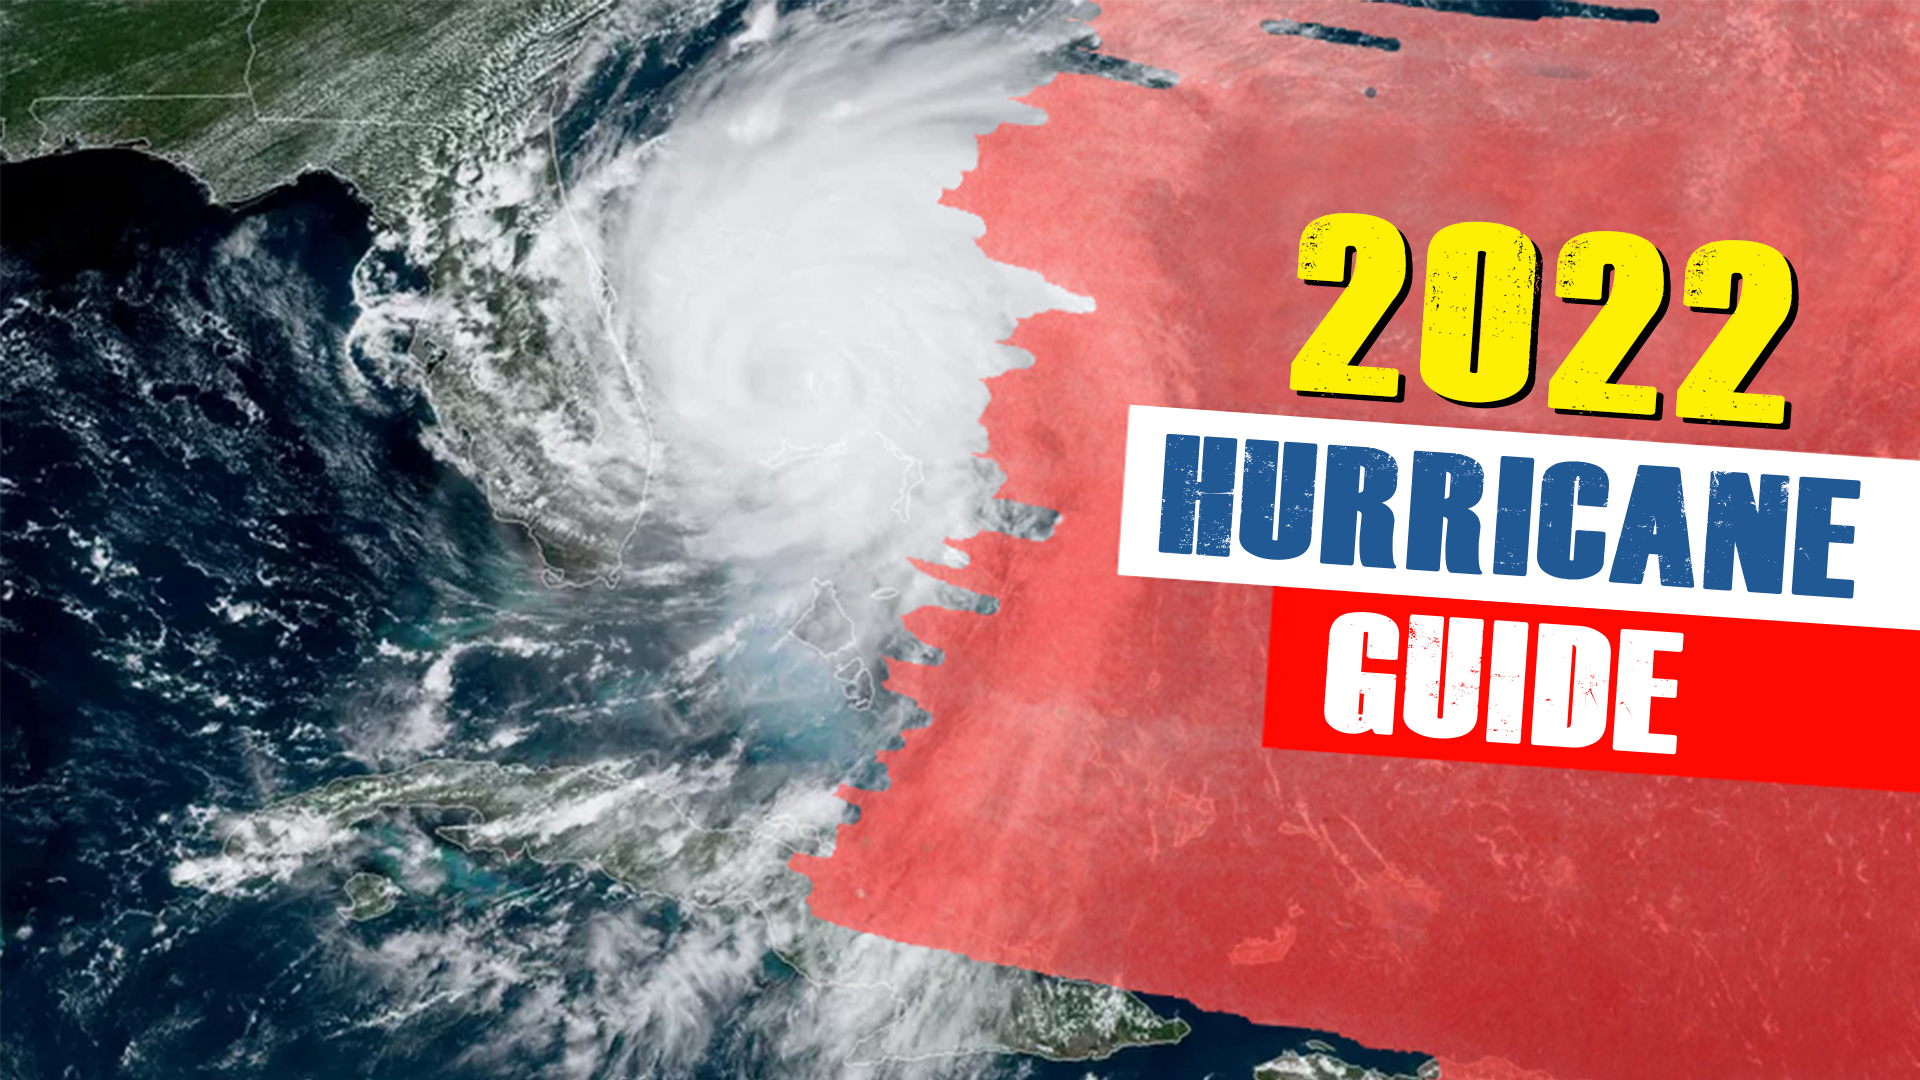 Hurricane Guide 2022 on WMMO Orlando